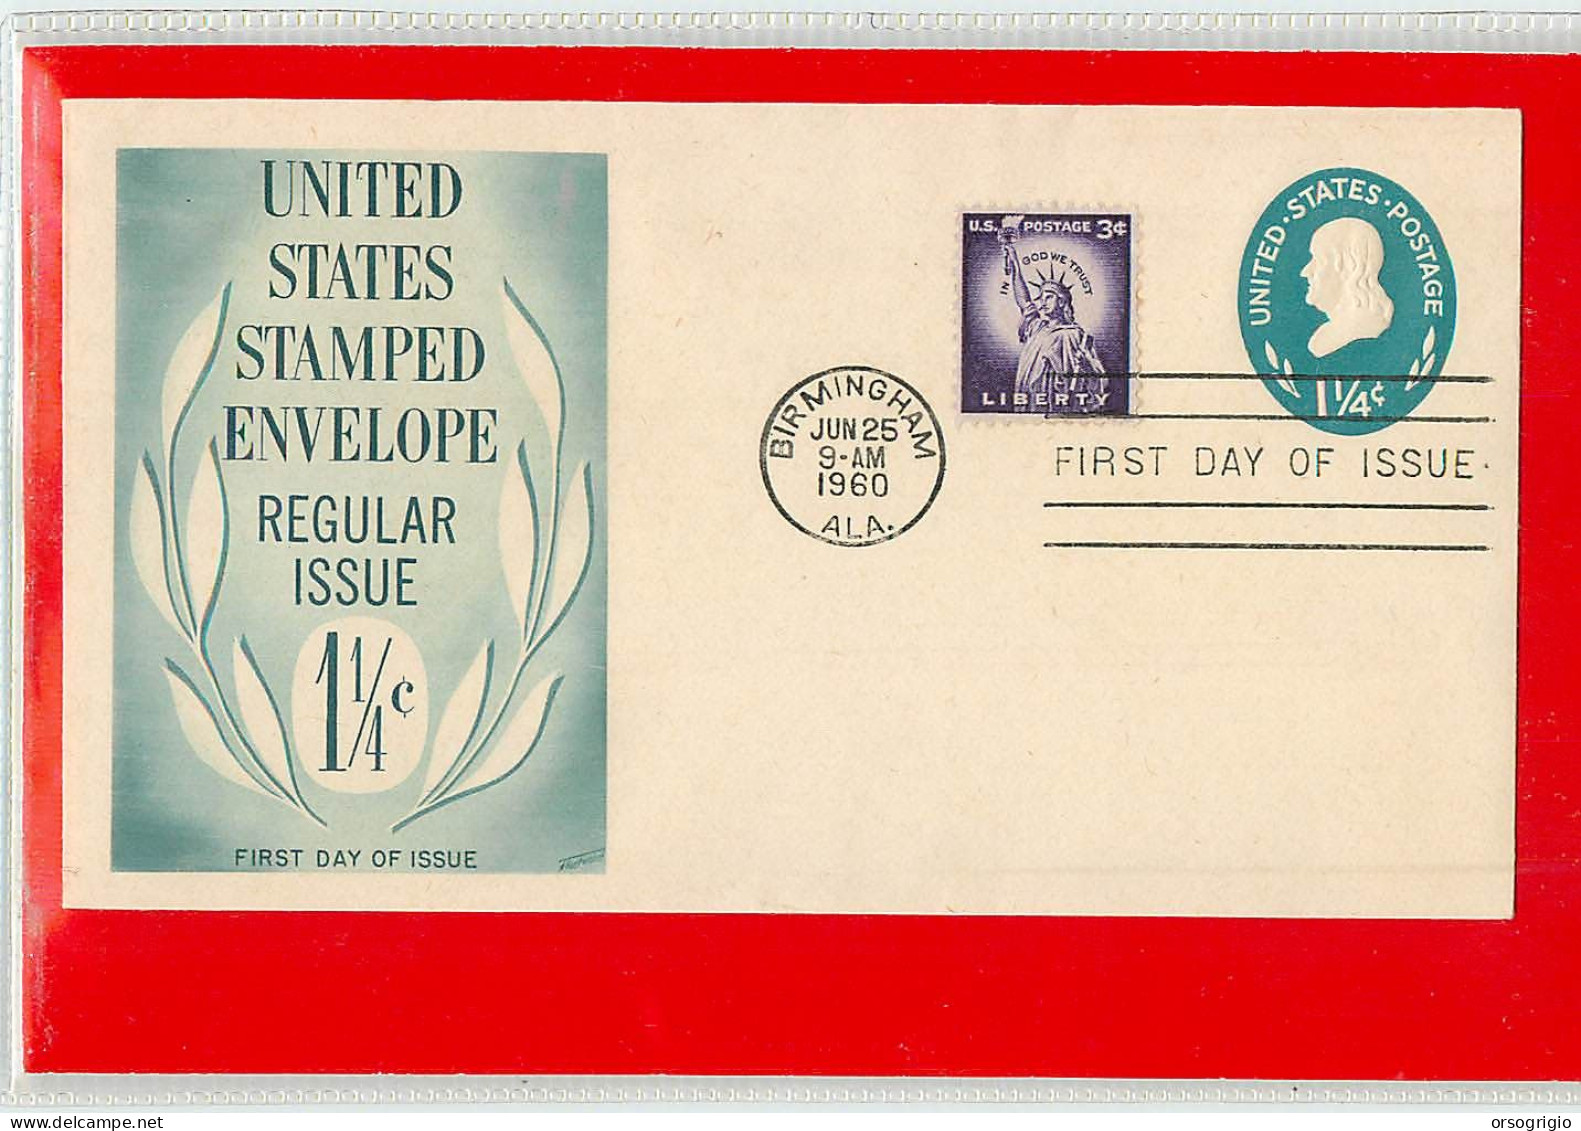 USA - EMBOSSED STAMPED ENVELOPE - FDC 1960  1,4c. - 1941-60